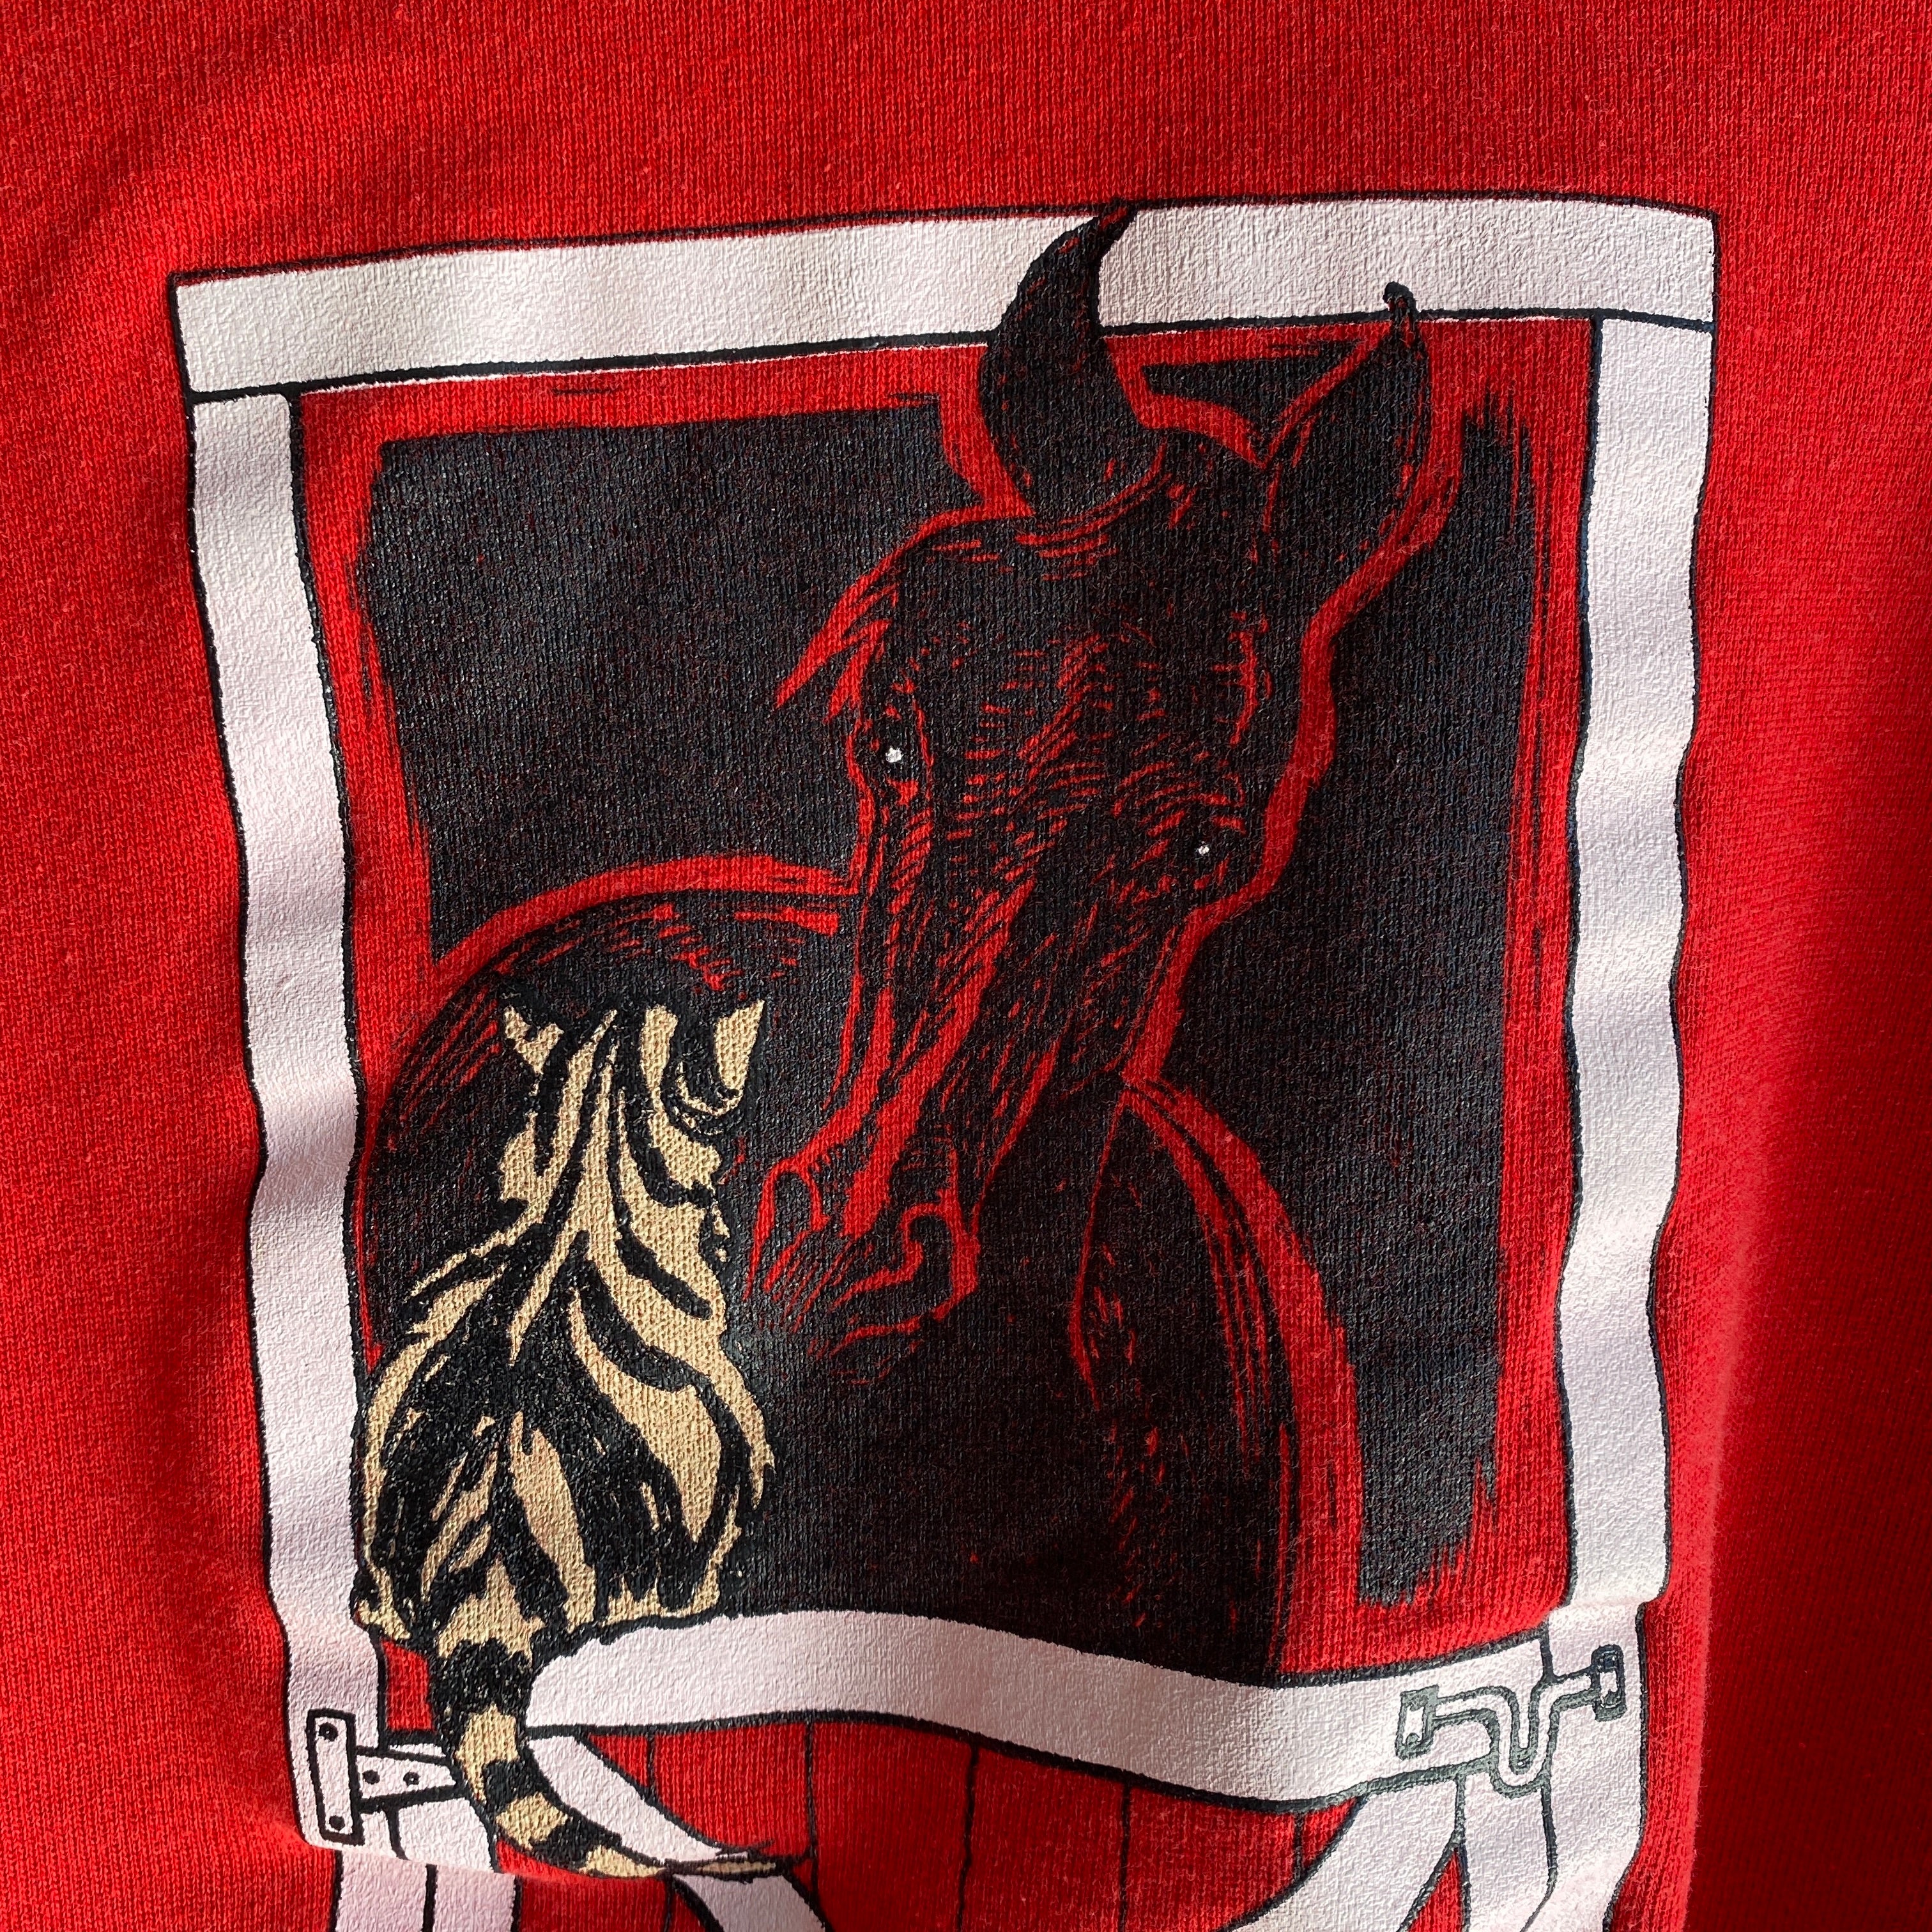 1980s Hanes Cat and Horse Graphic Sweatshirt